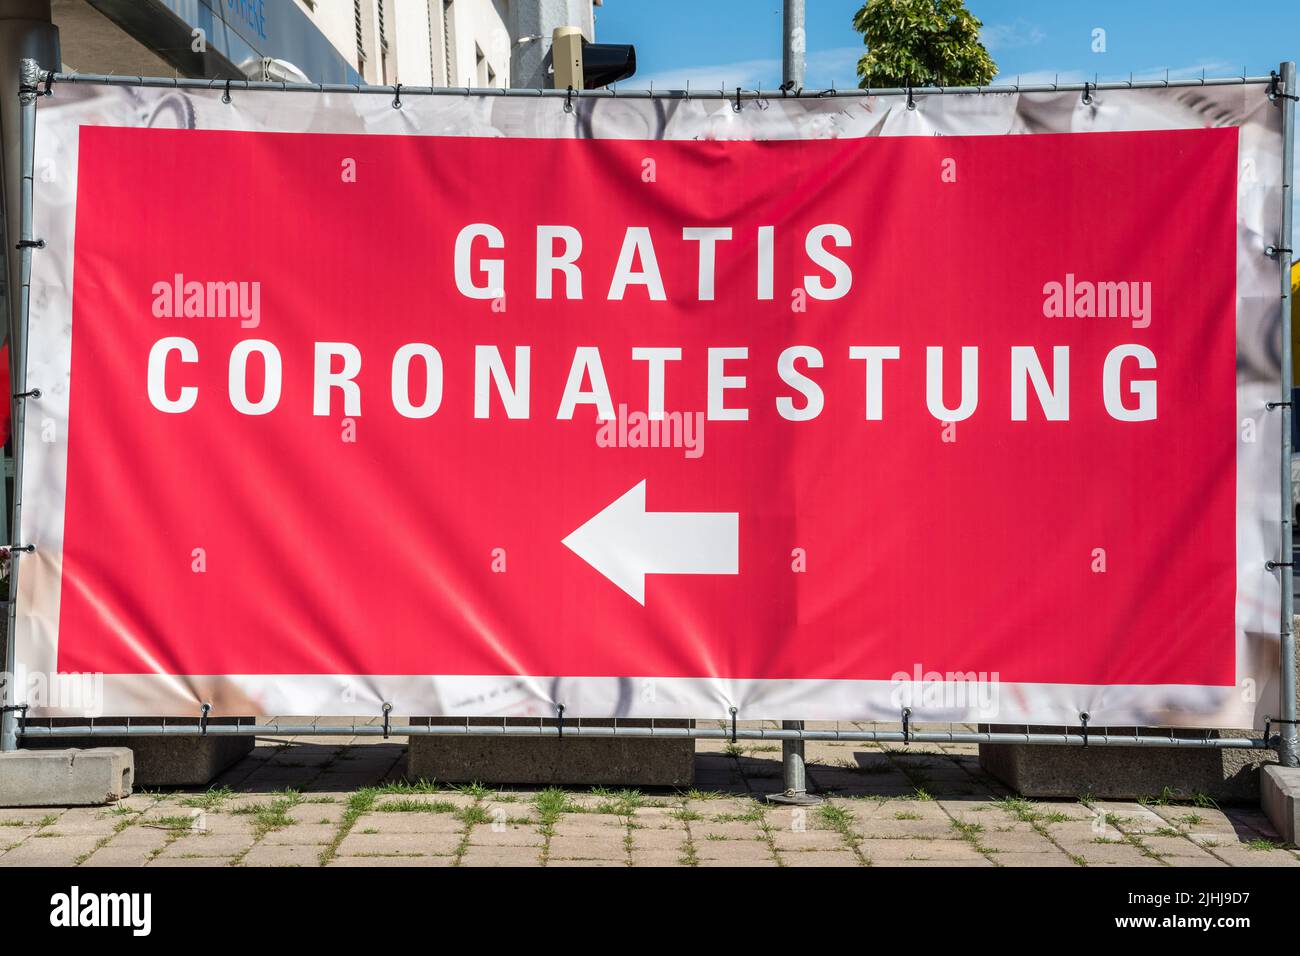 ‘Gratis Coronatestung’ (Free Coronavirus Testing) billboard in Austria. Stock Photo